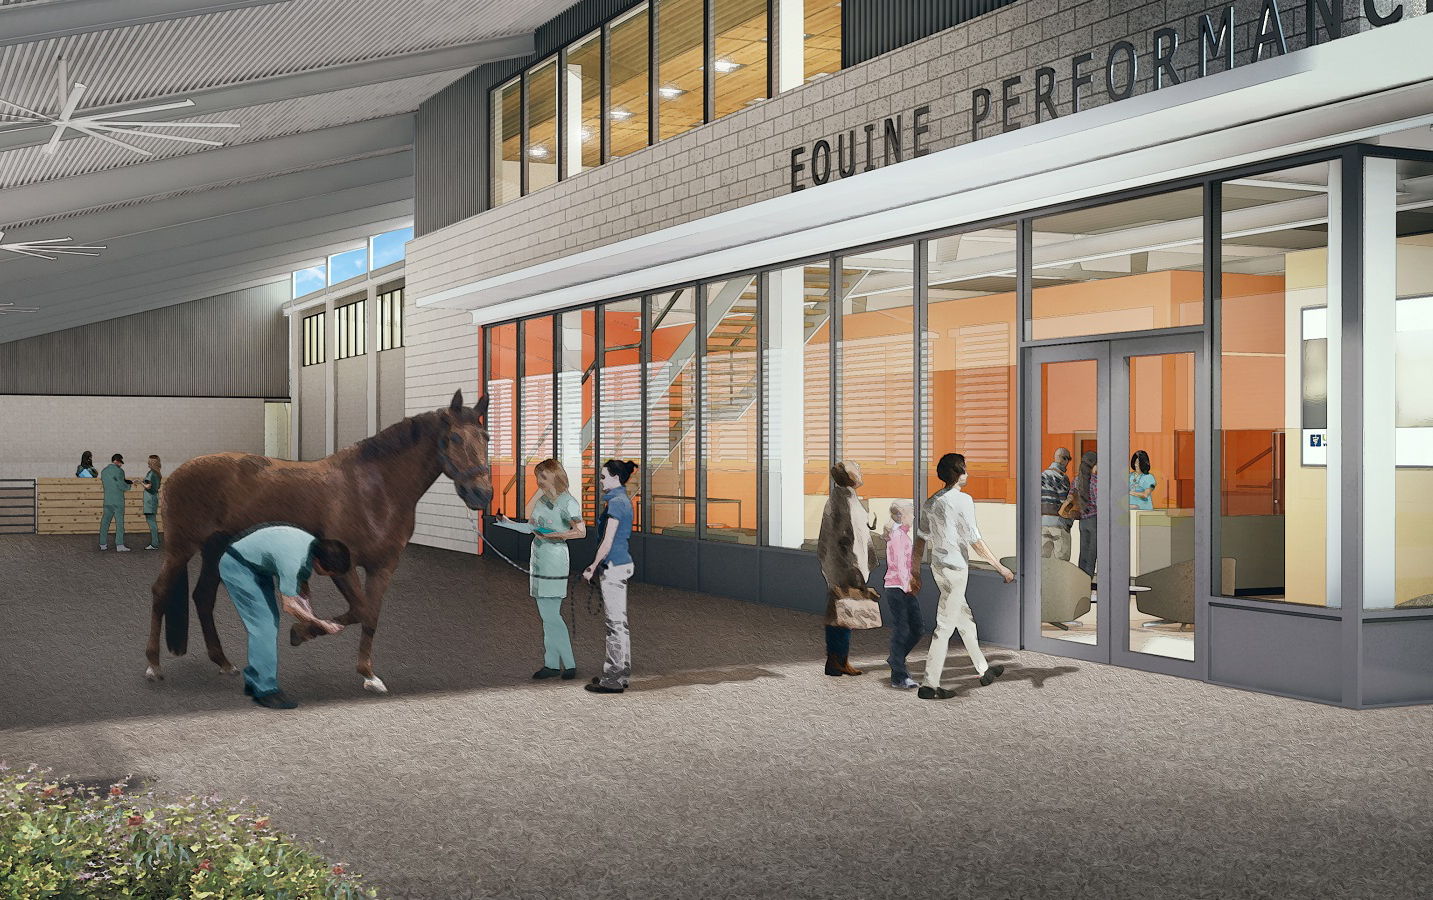 Equine Performance and Rehabilitation Center